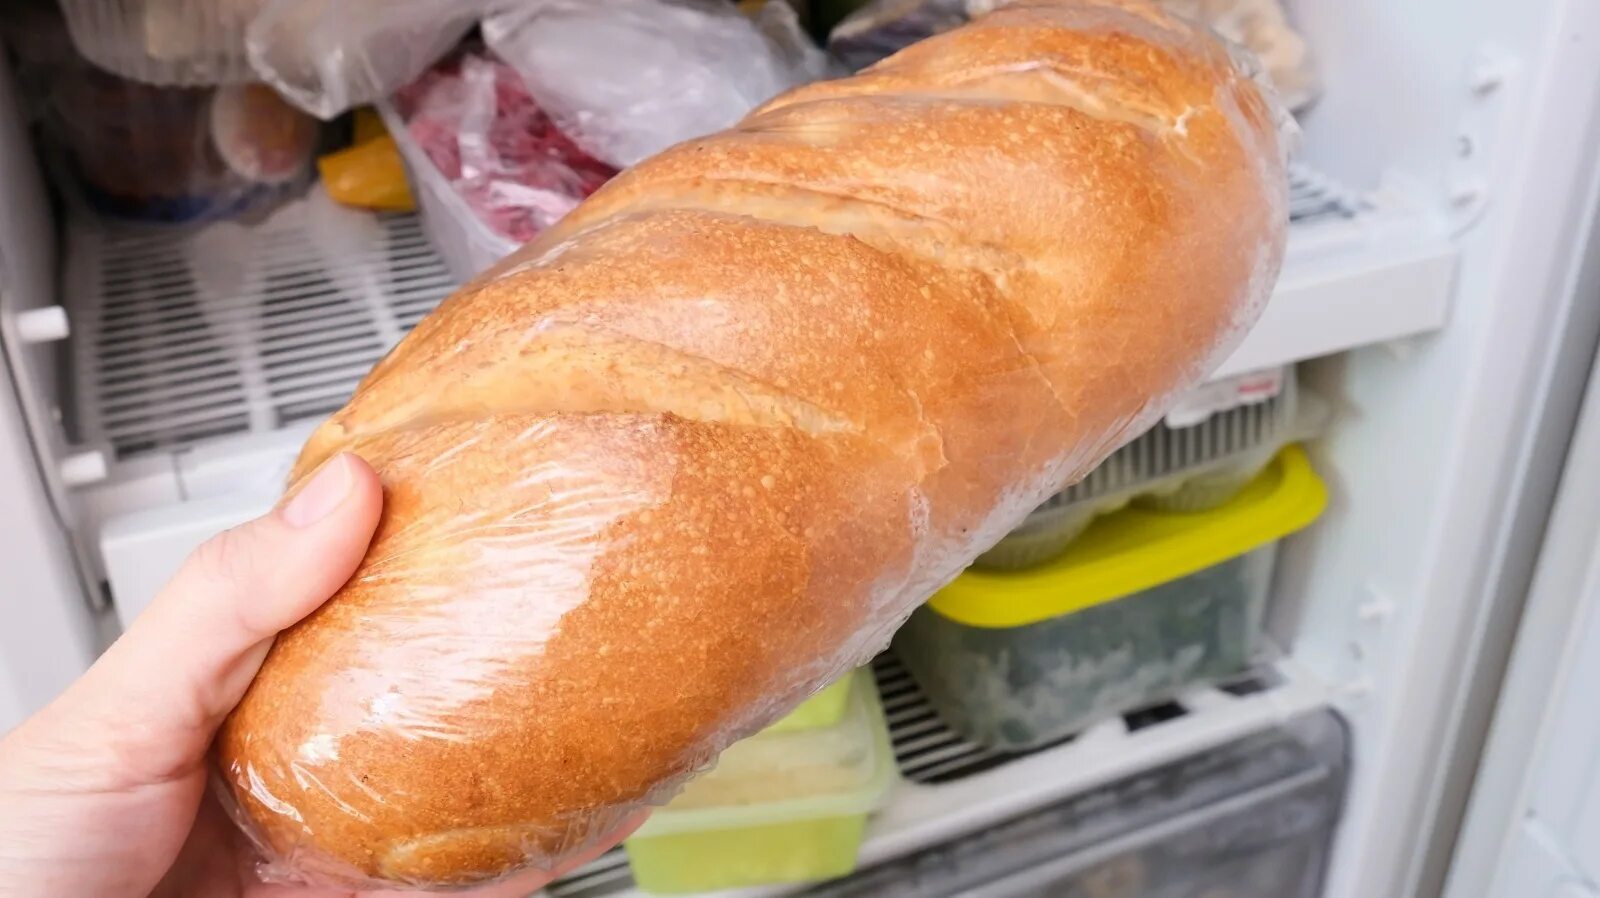 There is bread in the fridge. Хлеб в холодильнике. Хлеб в морозильнике. Хранение хлеба. Вчерашний хлеб.